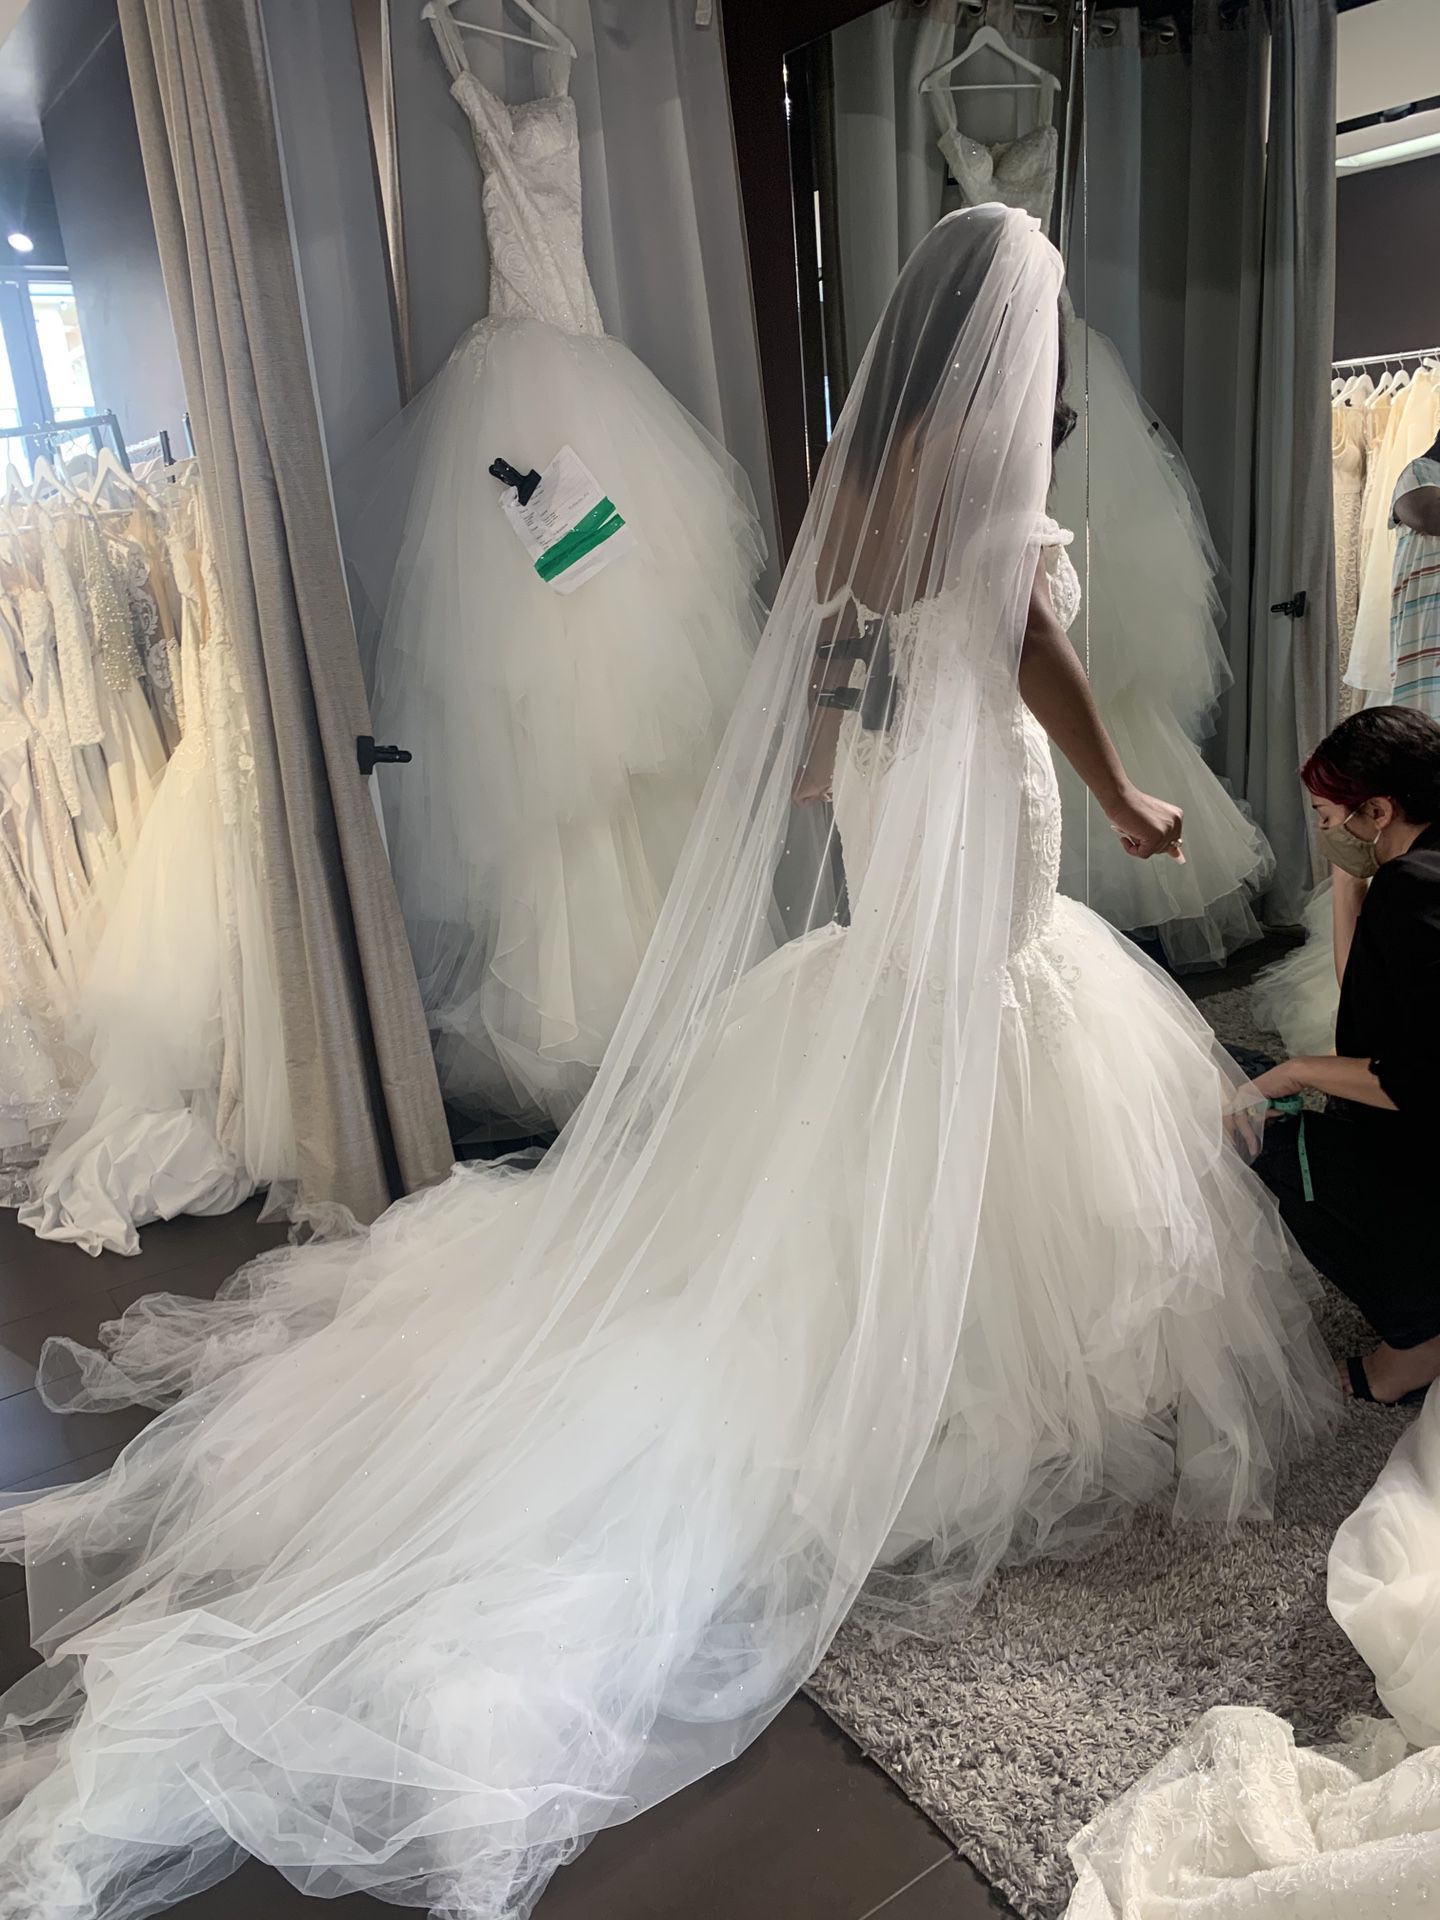 Viero Bridal Wedding dress